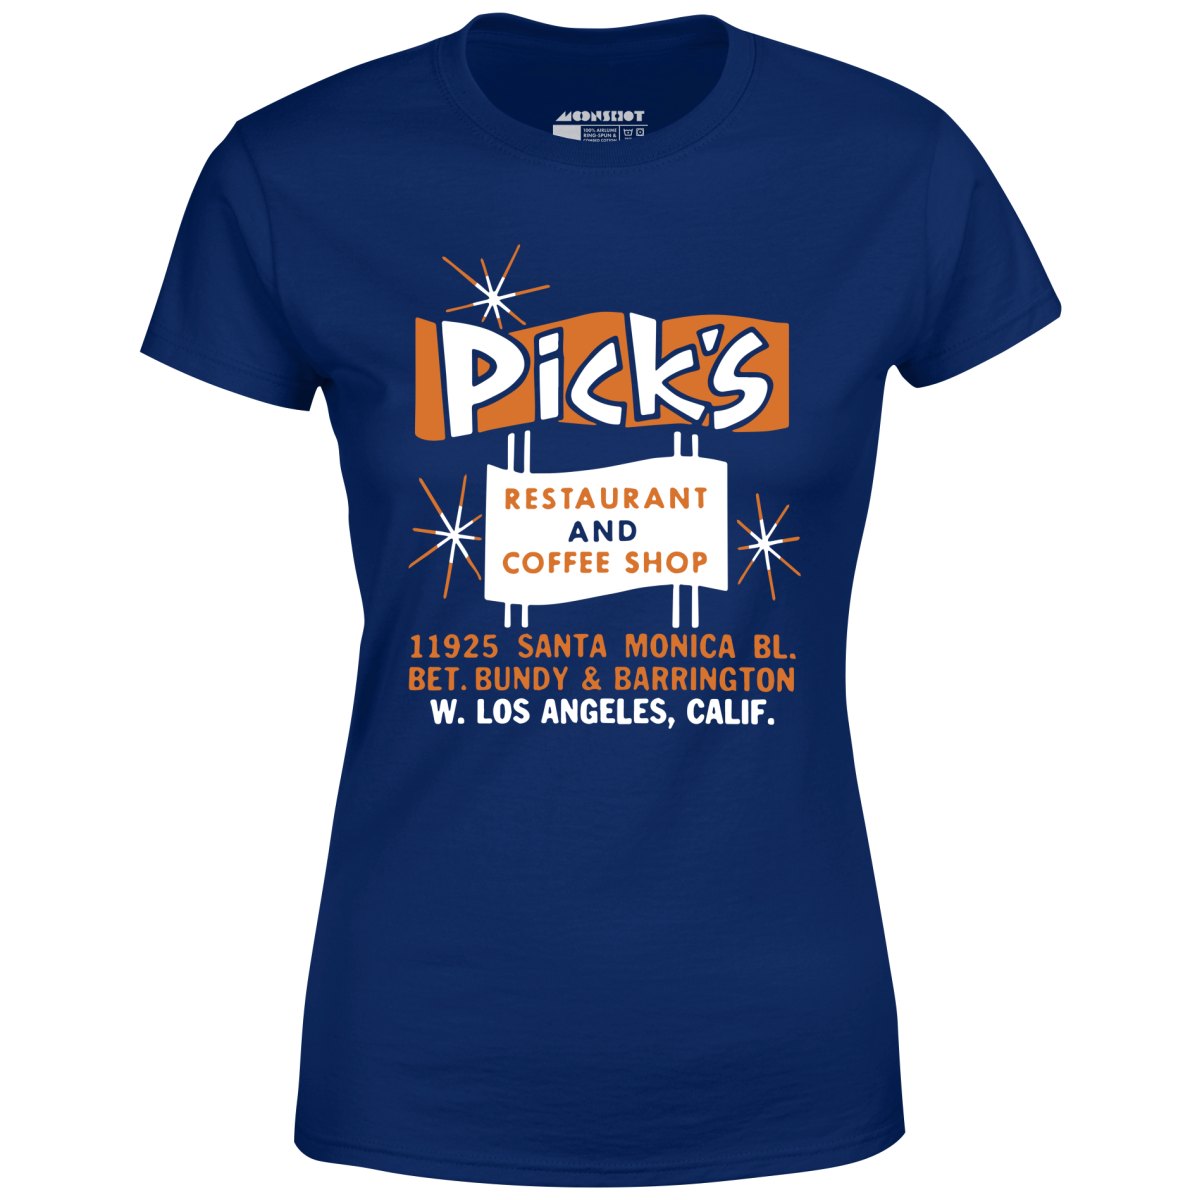 Pick's - Los Angeles, CA - Vintage Restaurant - Women's T-Shirt